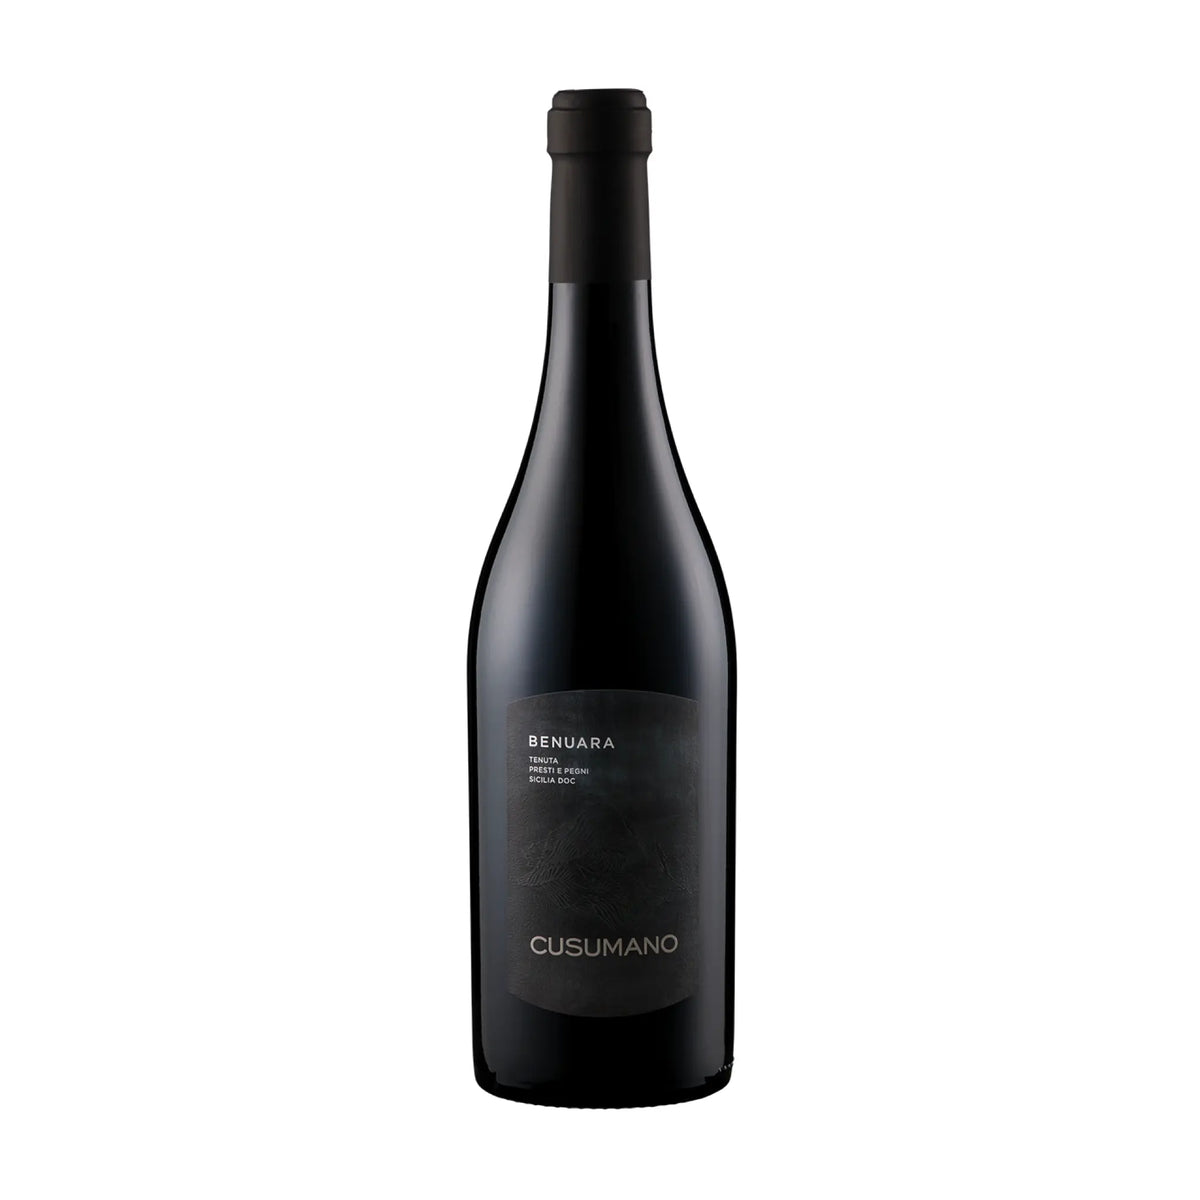 Cusumano-Rotwein-Cuvée-Italien-Sizilien-2021 Benuara Sicilia DOC-WINECOM